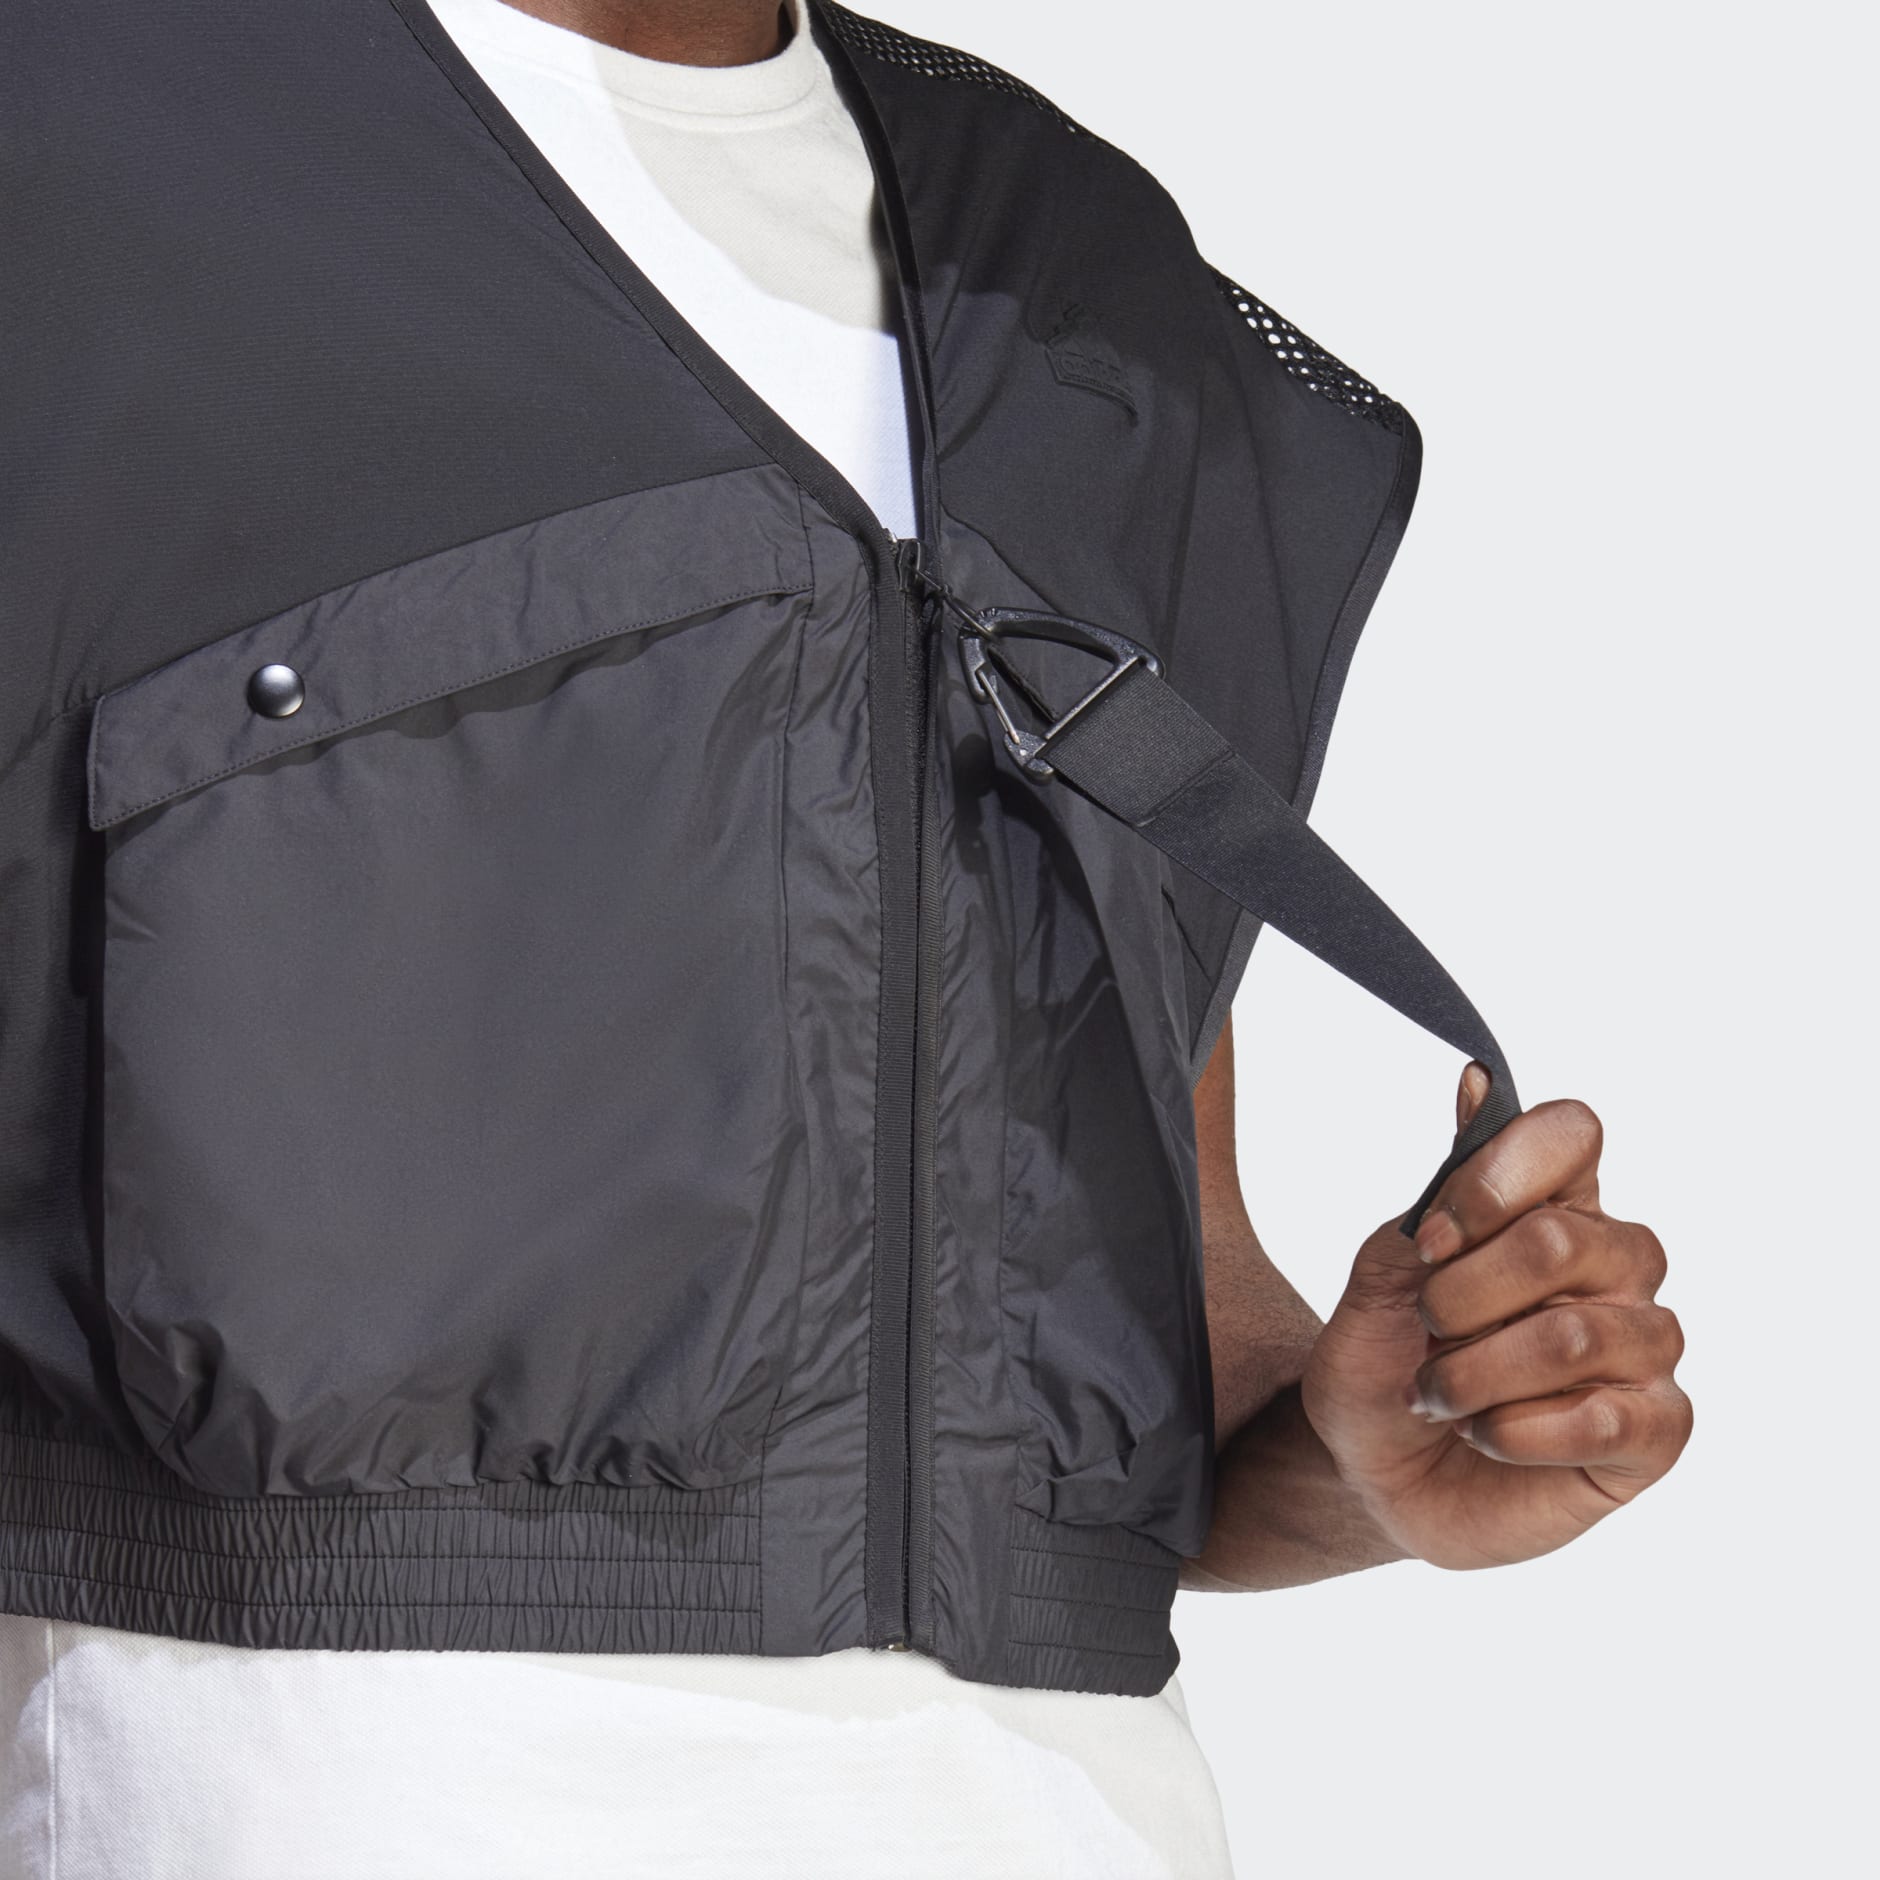 Diplomatieke kwesties Uittreksel leeftijd Men's Clothing - City Escape Premium Vest - Black | adidas Saudi Arabia